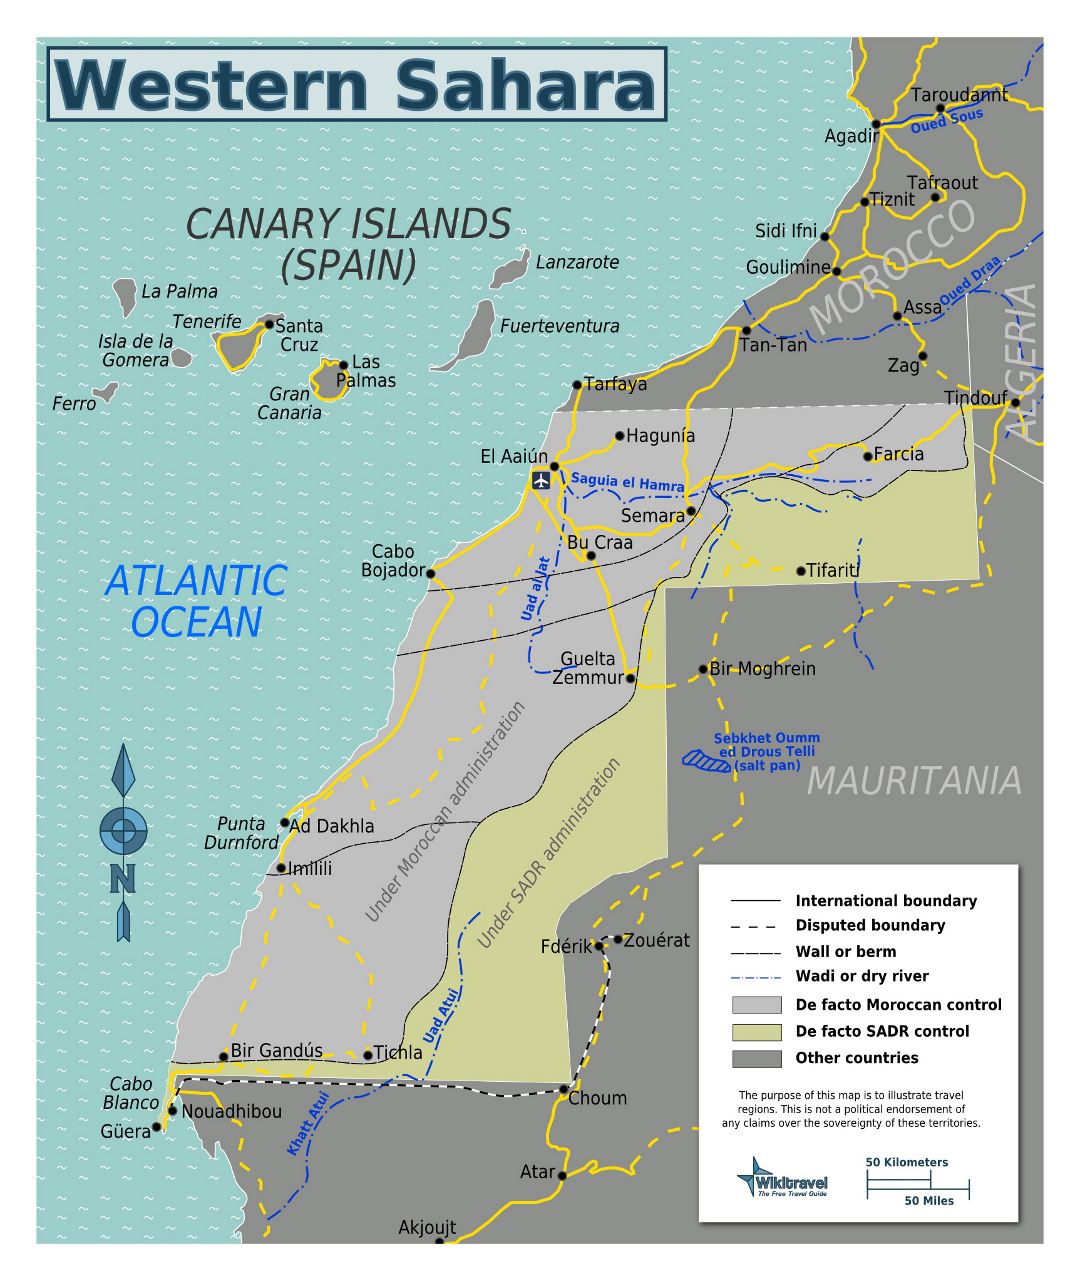 Large regions map of Western Sahara